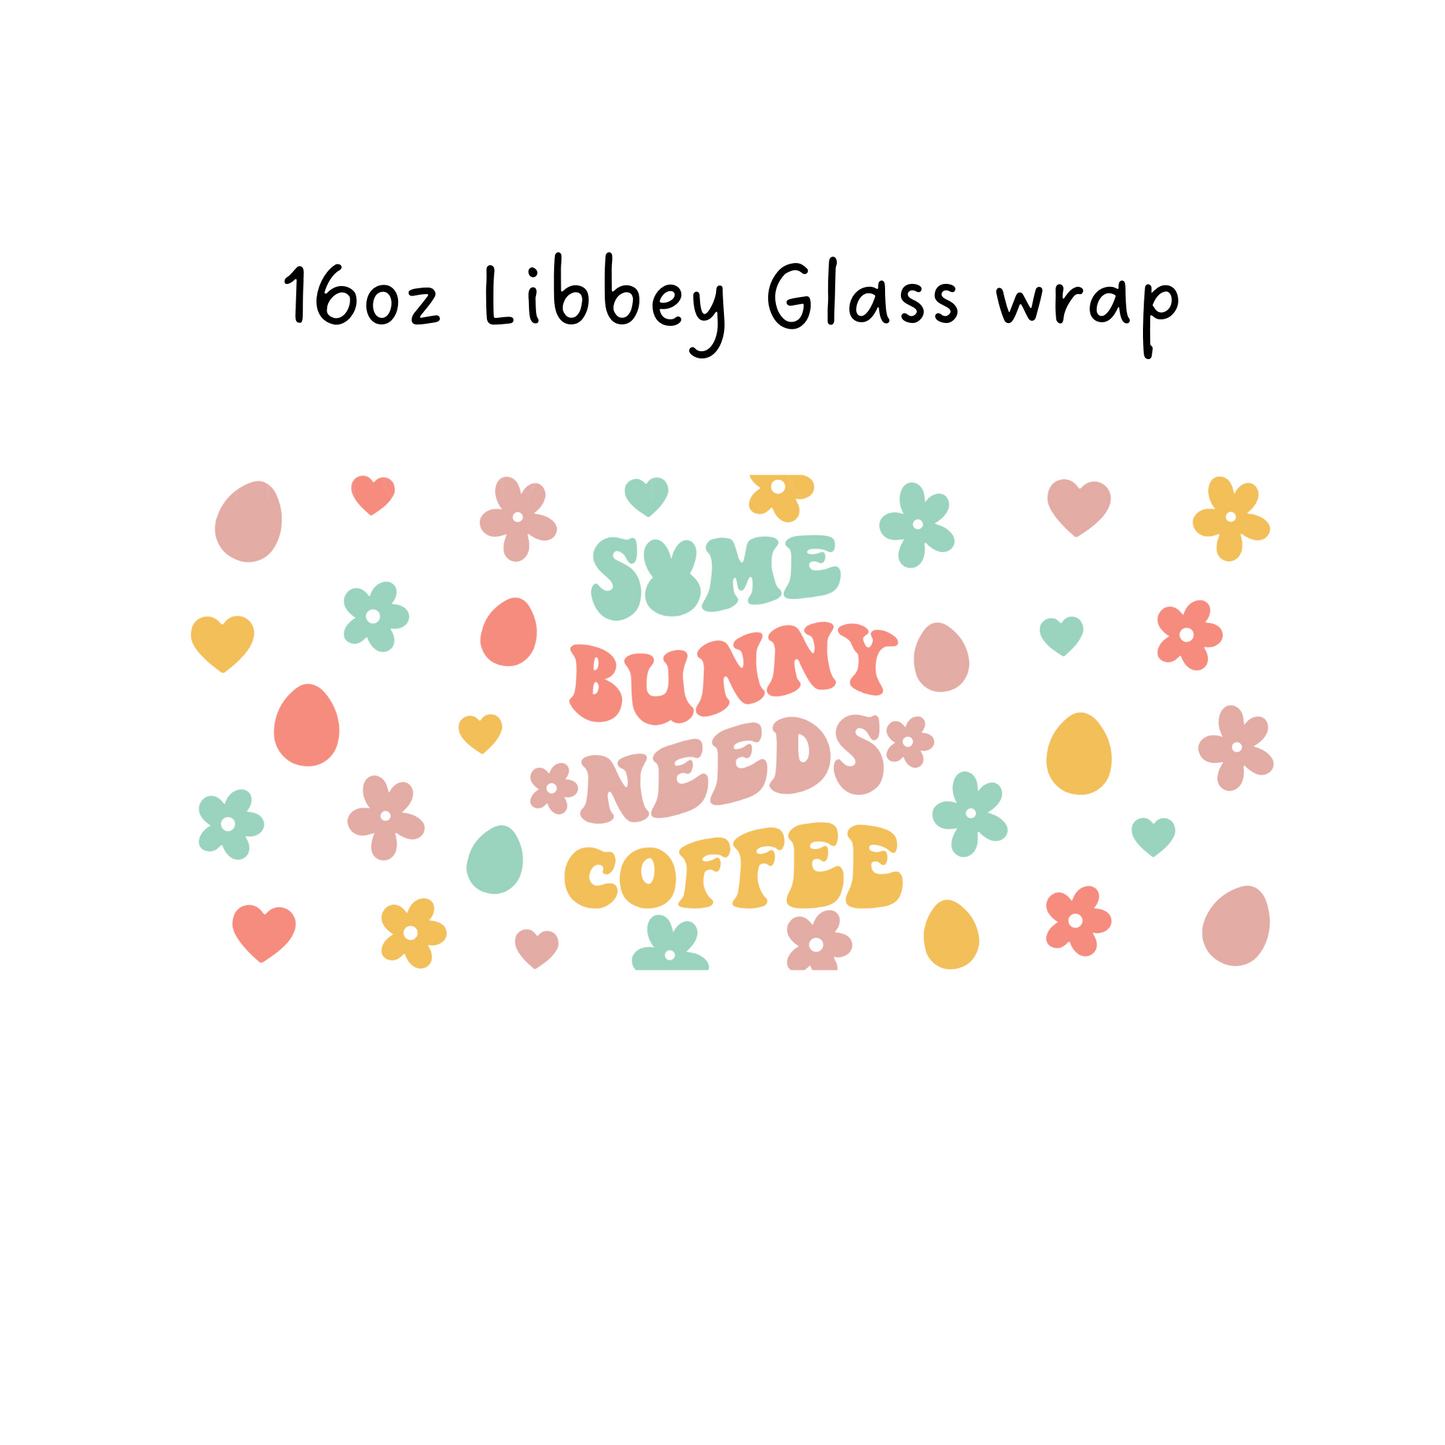 Some Bunny Needs Coffee 16 Oz Libbey Beer Glass Wrap